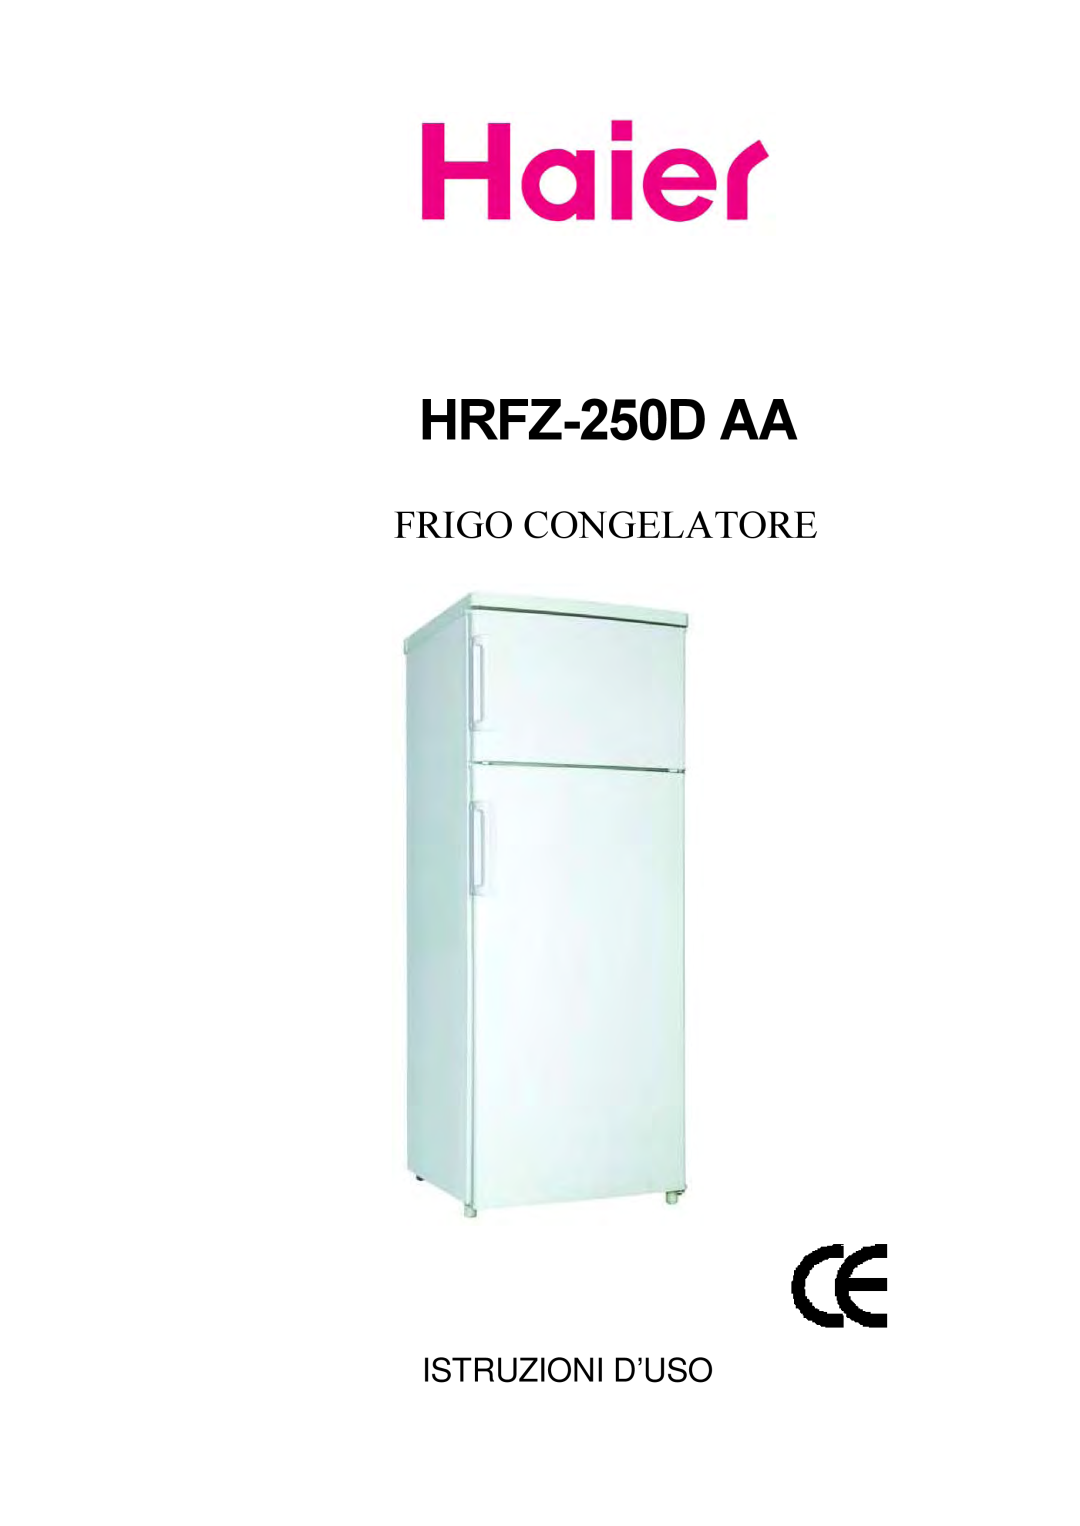 Haier HRFZ-250D AA manual Istruzioni D’Uso, HRFZ-250DAA, Frigo Congelatore 